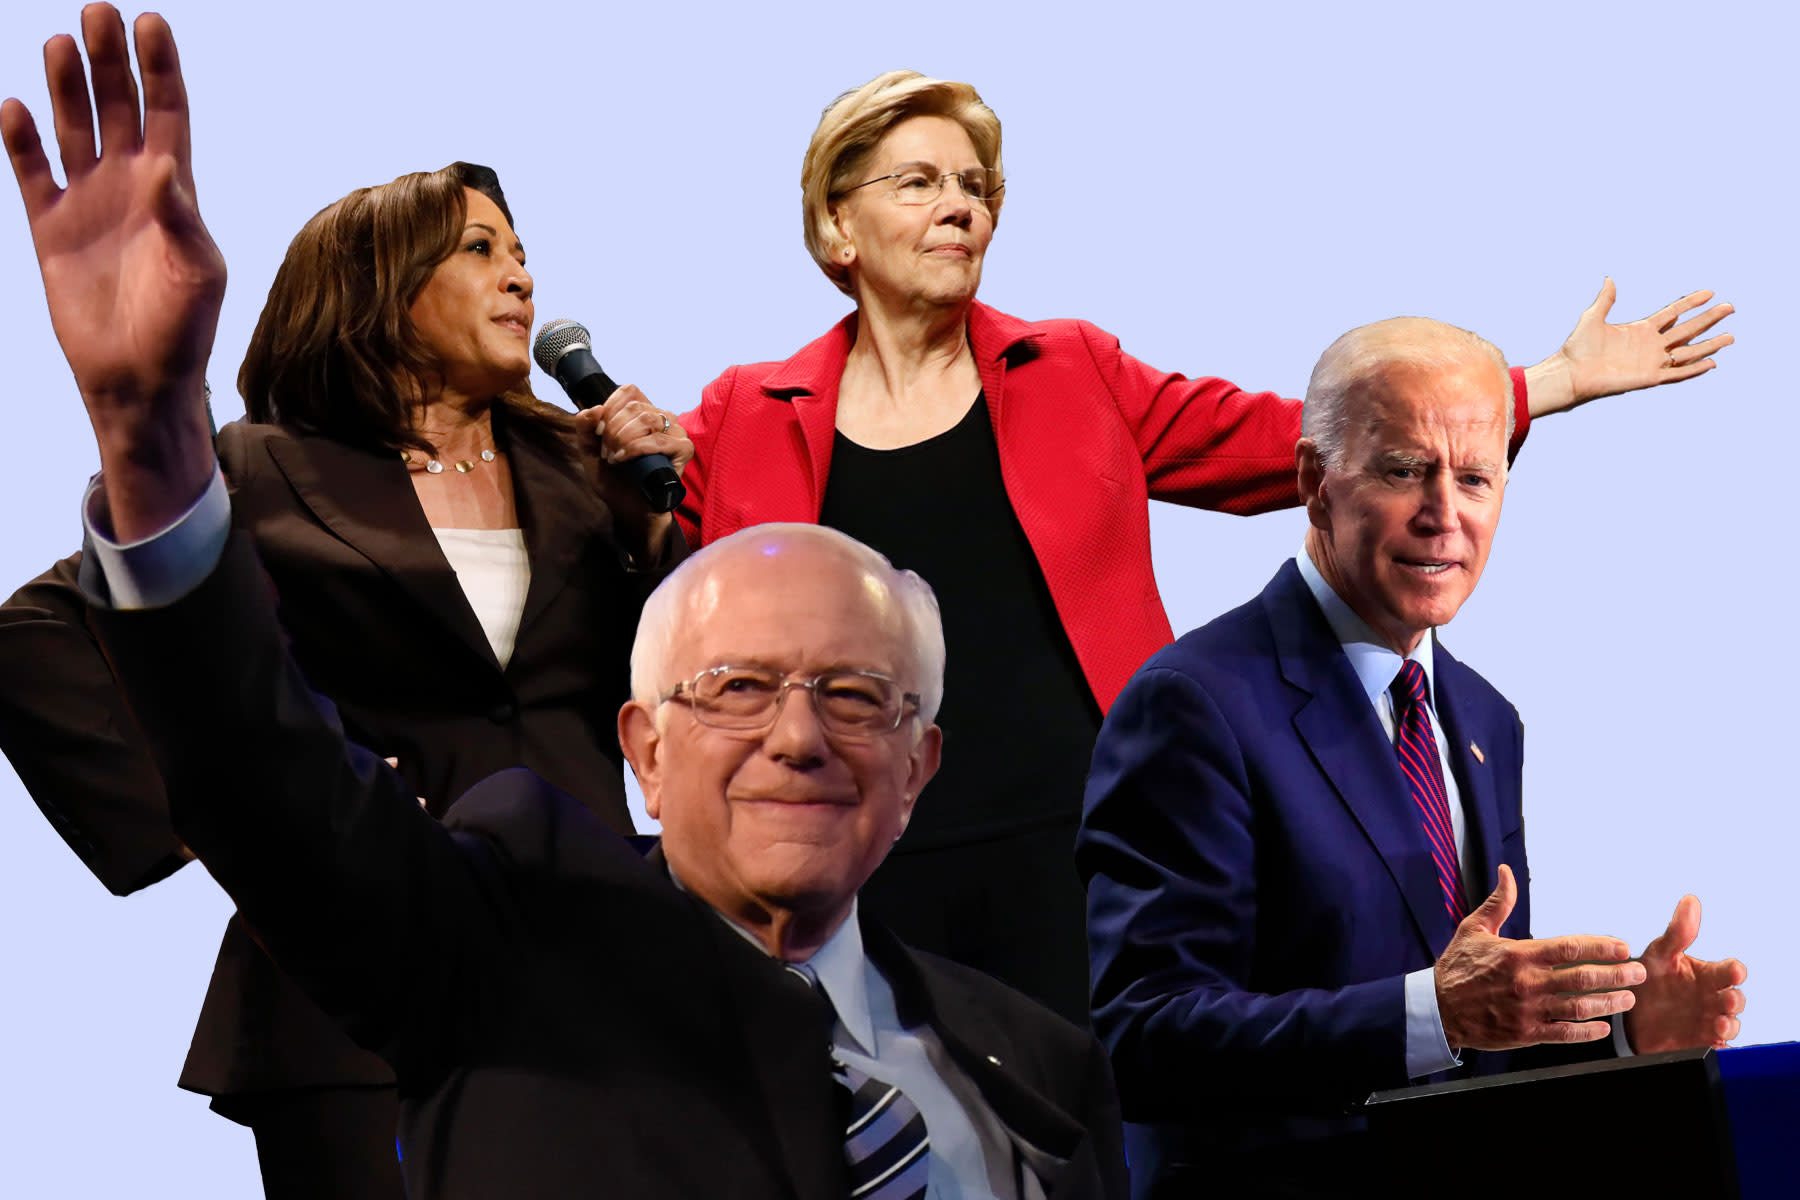 The RS Politics 2020 Democratic Primary Leaderboard